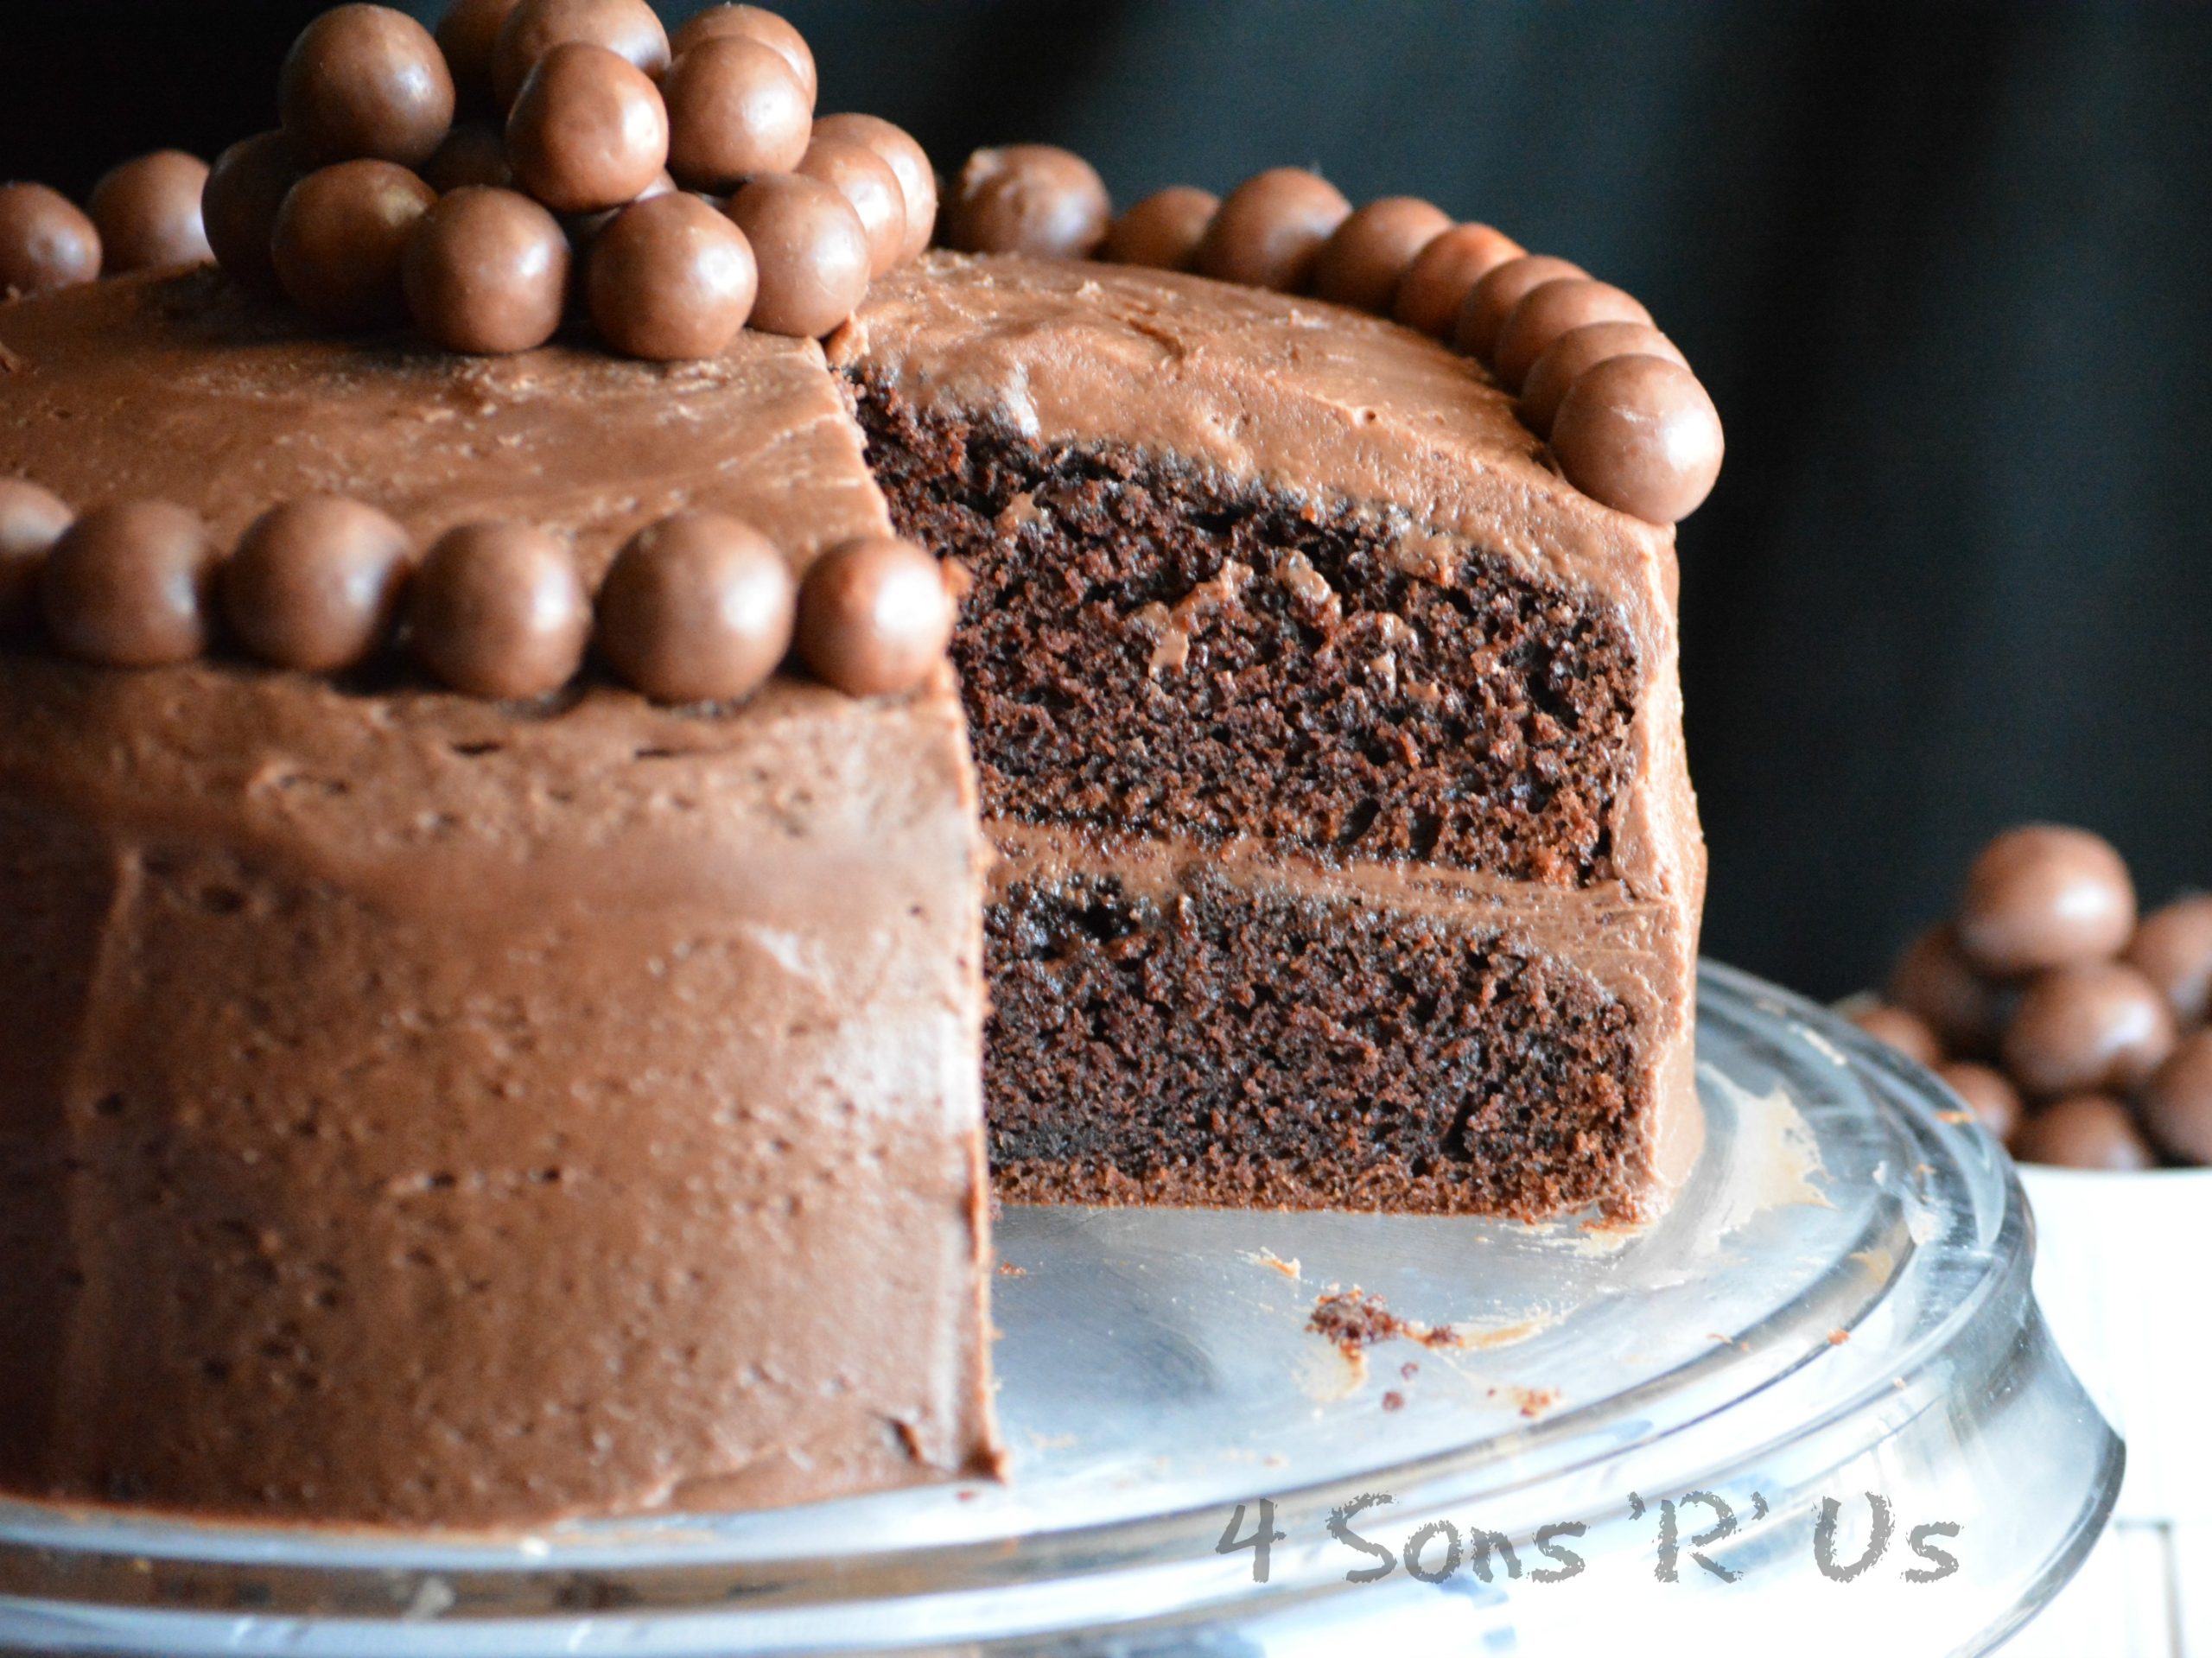 https://4sonrus.com/wp-content/uploads/2016/09/Chocolate-Malt-Cake-scaled.jpg